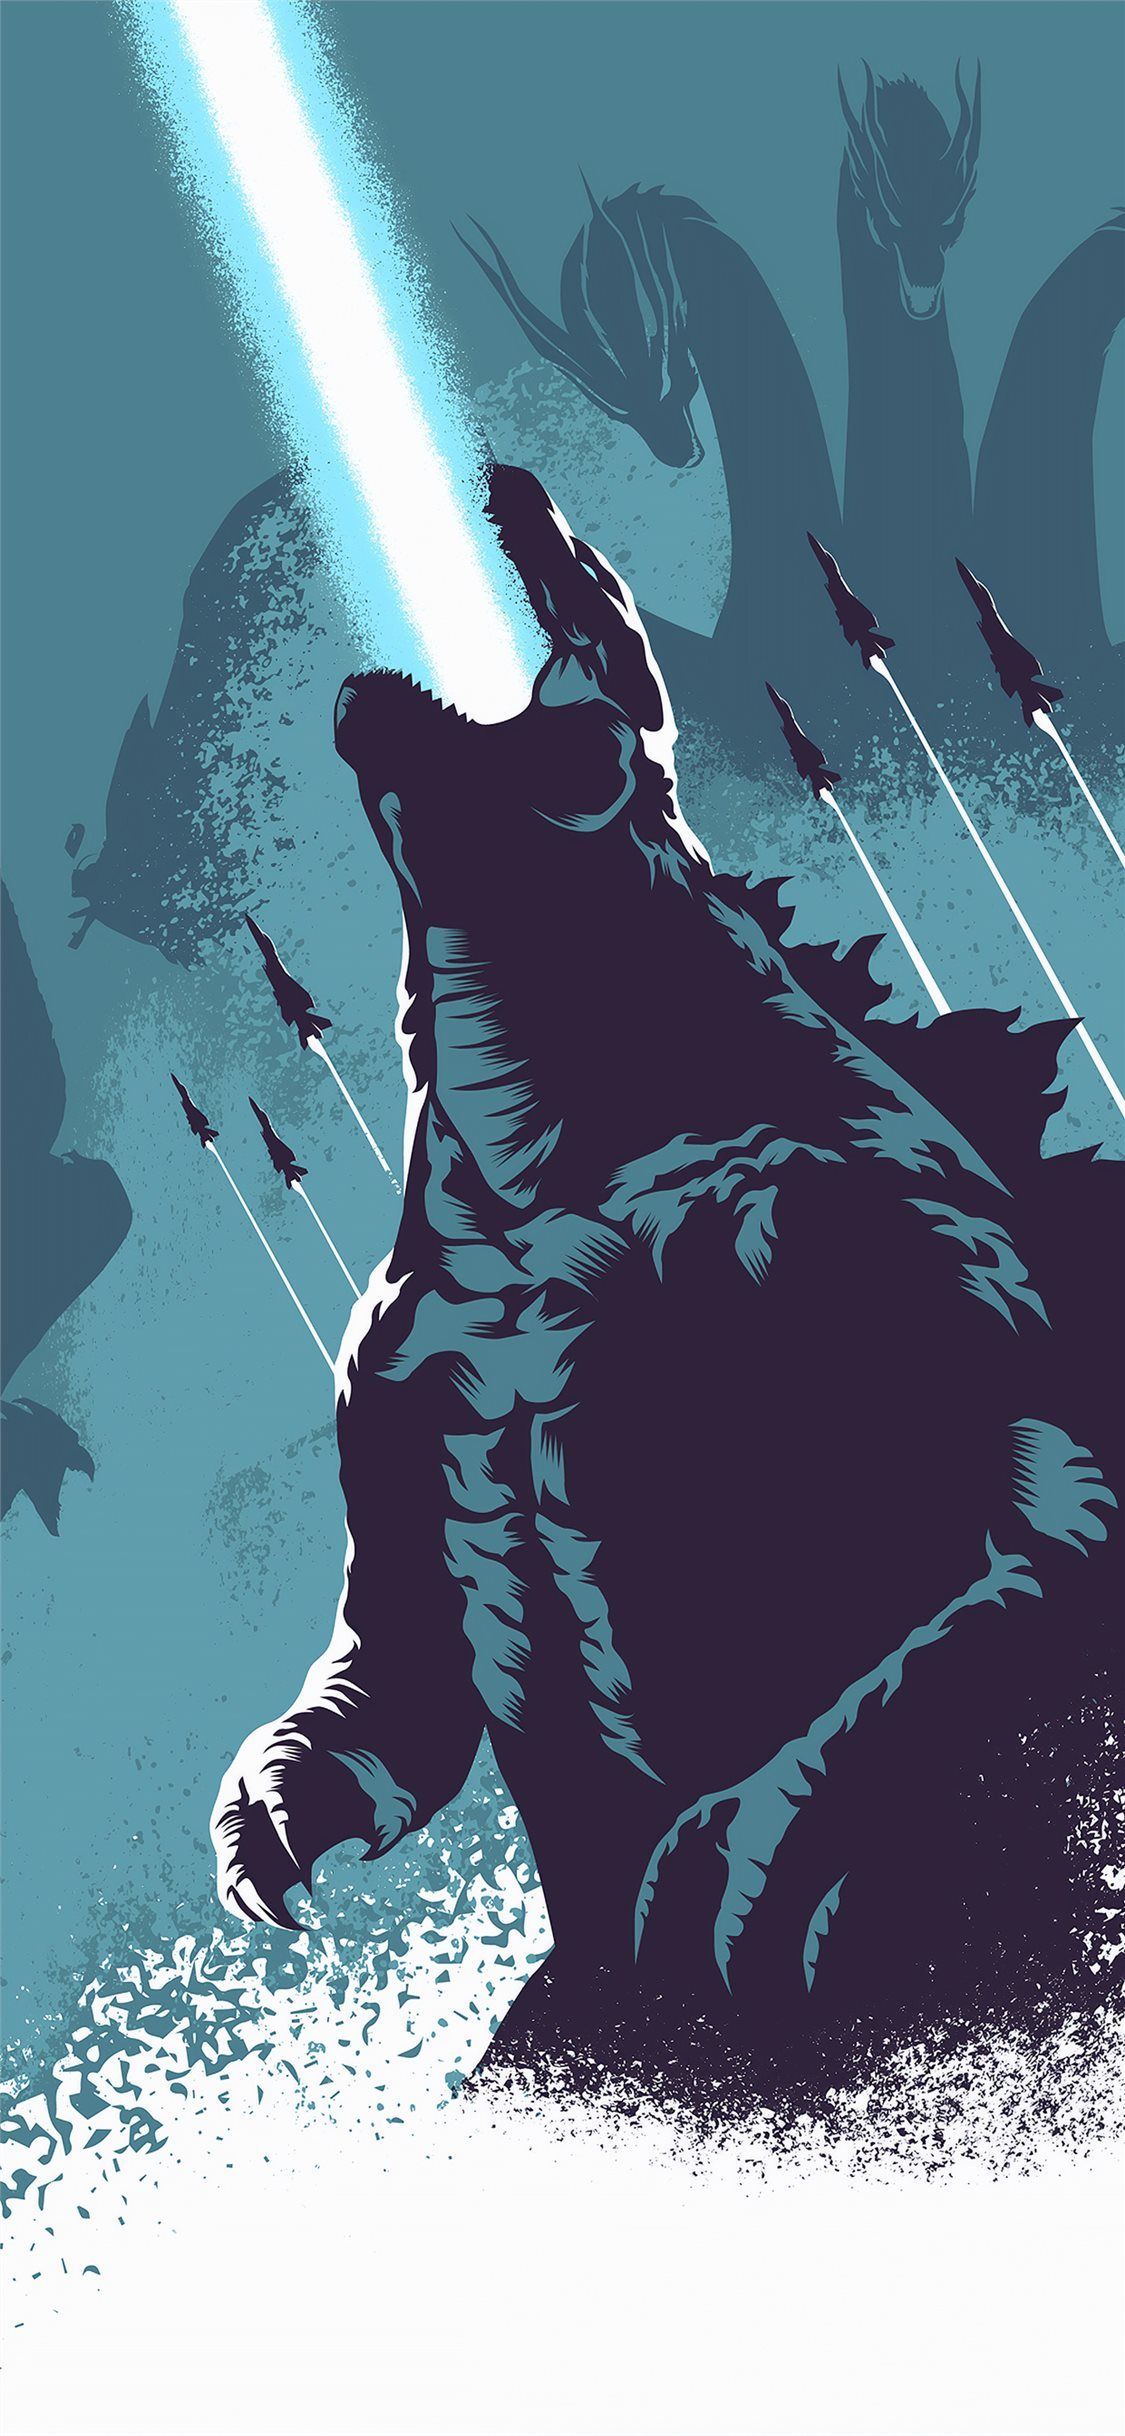 iPhone Xr Wallpaper 4k Download Free site. Godzilla wallpaper, King kong vs godzilla, Godzilla